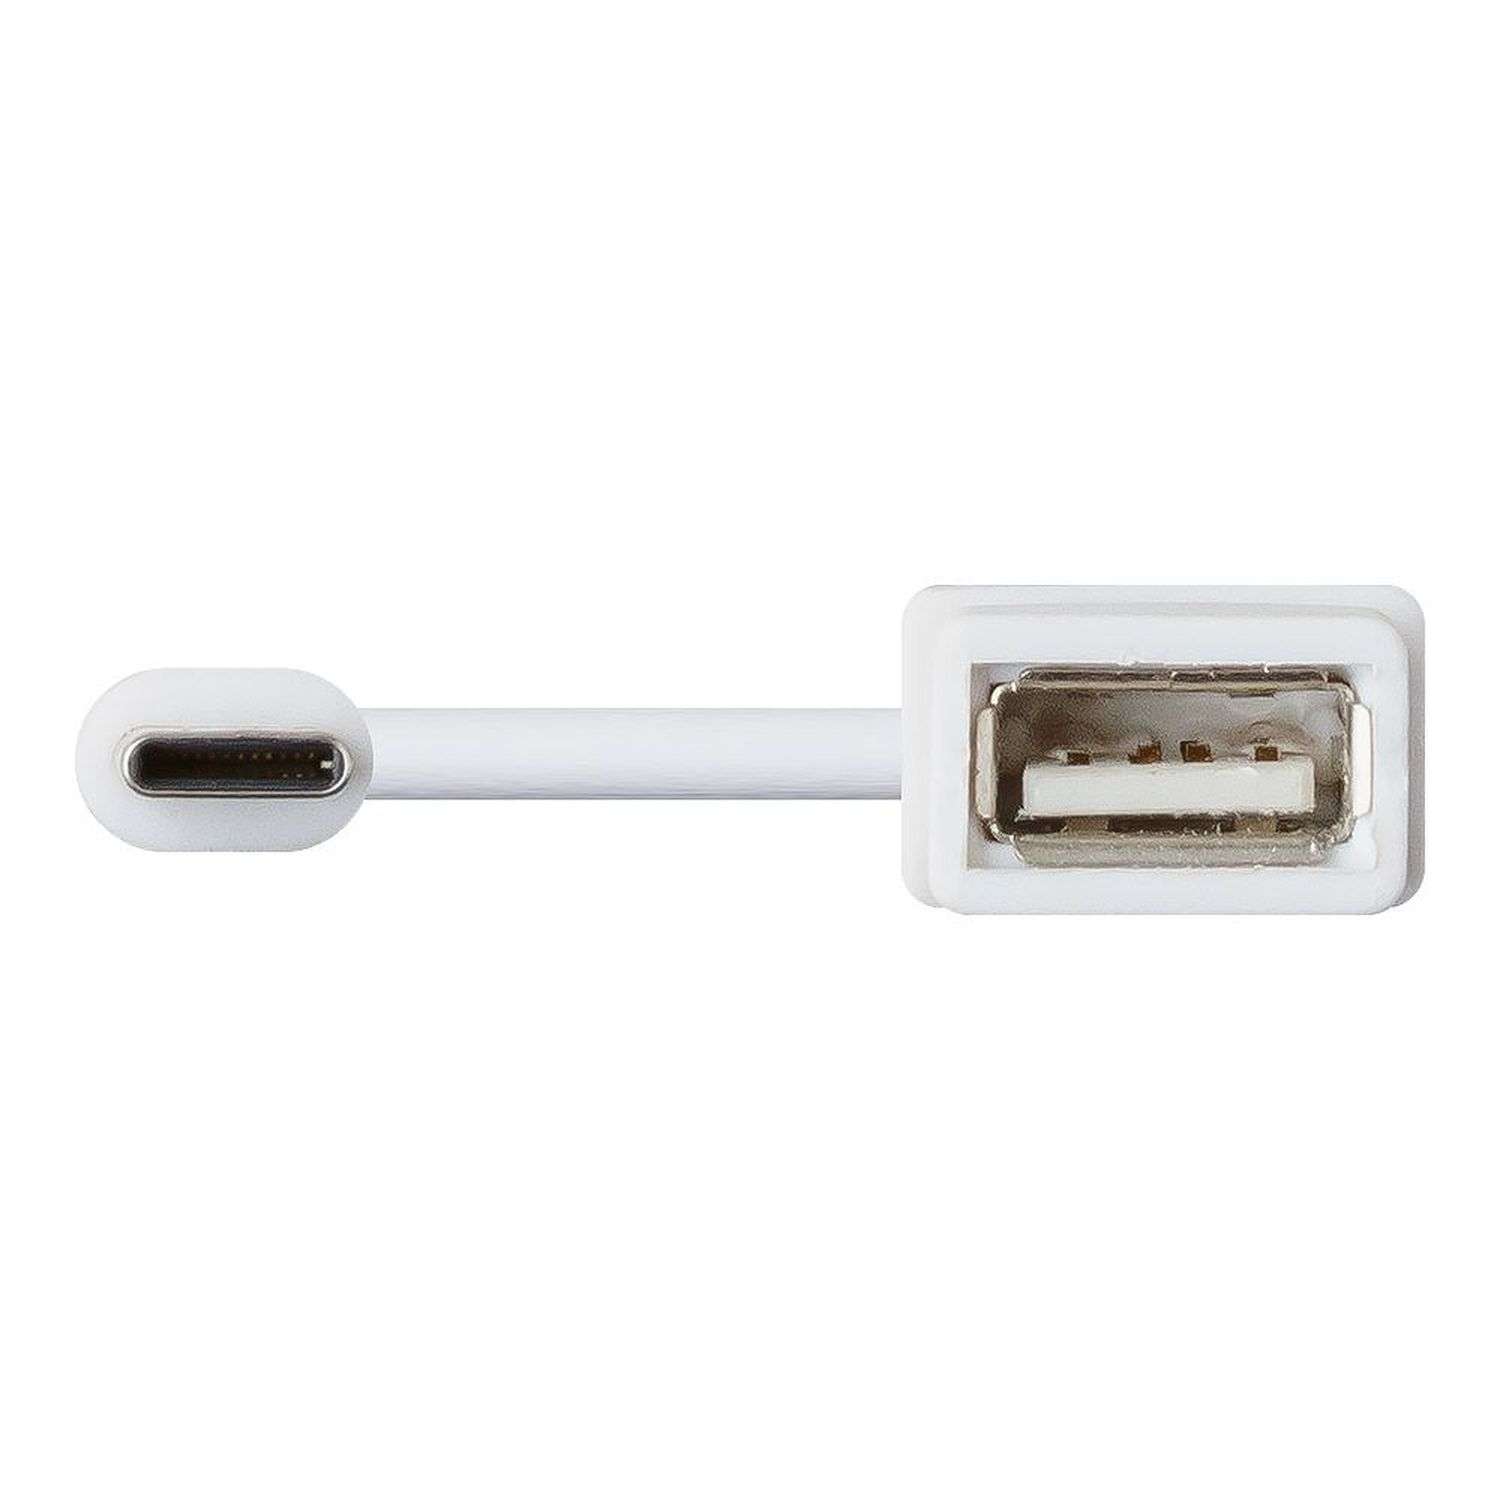 USB OTG адаптер Diin Type-C на USB - фото 3